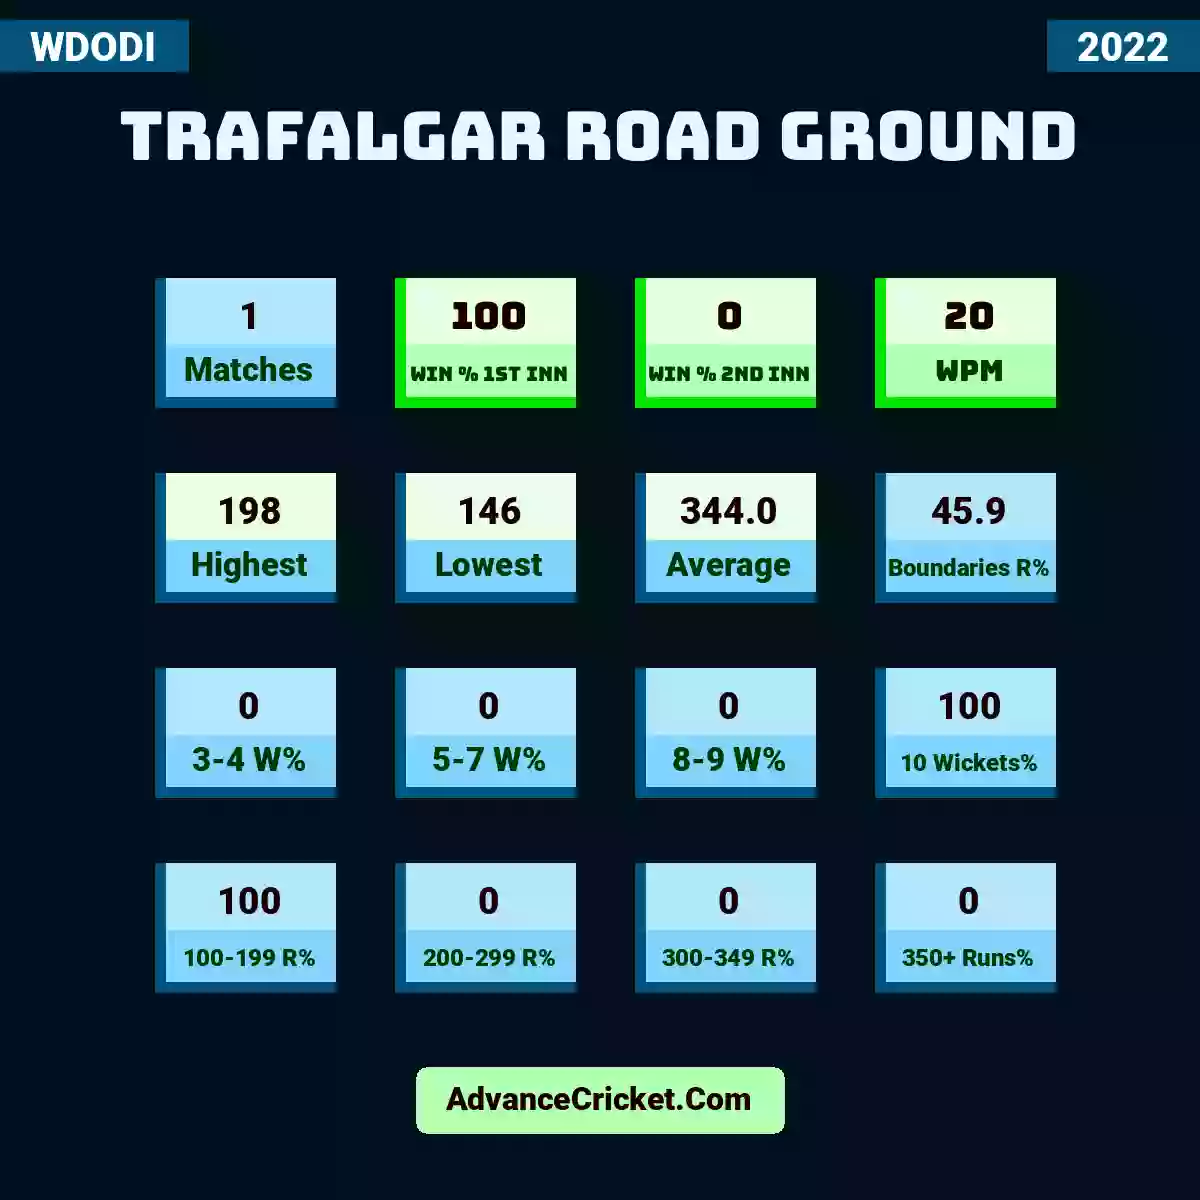 Image showing Trafalgar Road Ground with Matches: 1, Win % 1st Inn: 100, Win % 2nd Inn: 0, WPM: 20, Highest: 198, Lowest: 146, Average: 344.0, Boundaries R%: 45.9, 3-4 W%: 0, 5-7 W%: 0, 8-9 W%: 0, 10 Wickets%: 100, 100-199 R%: 100, 200-299 R%: 0, 300-349 R%: 0, 350+ Runs%: 0.